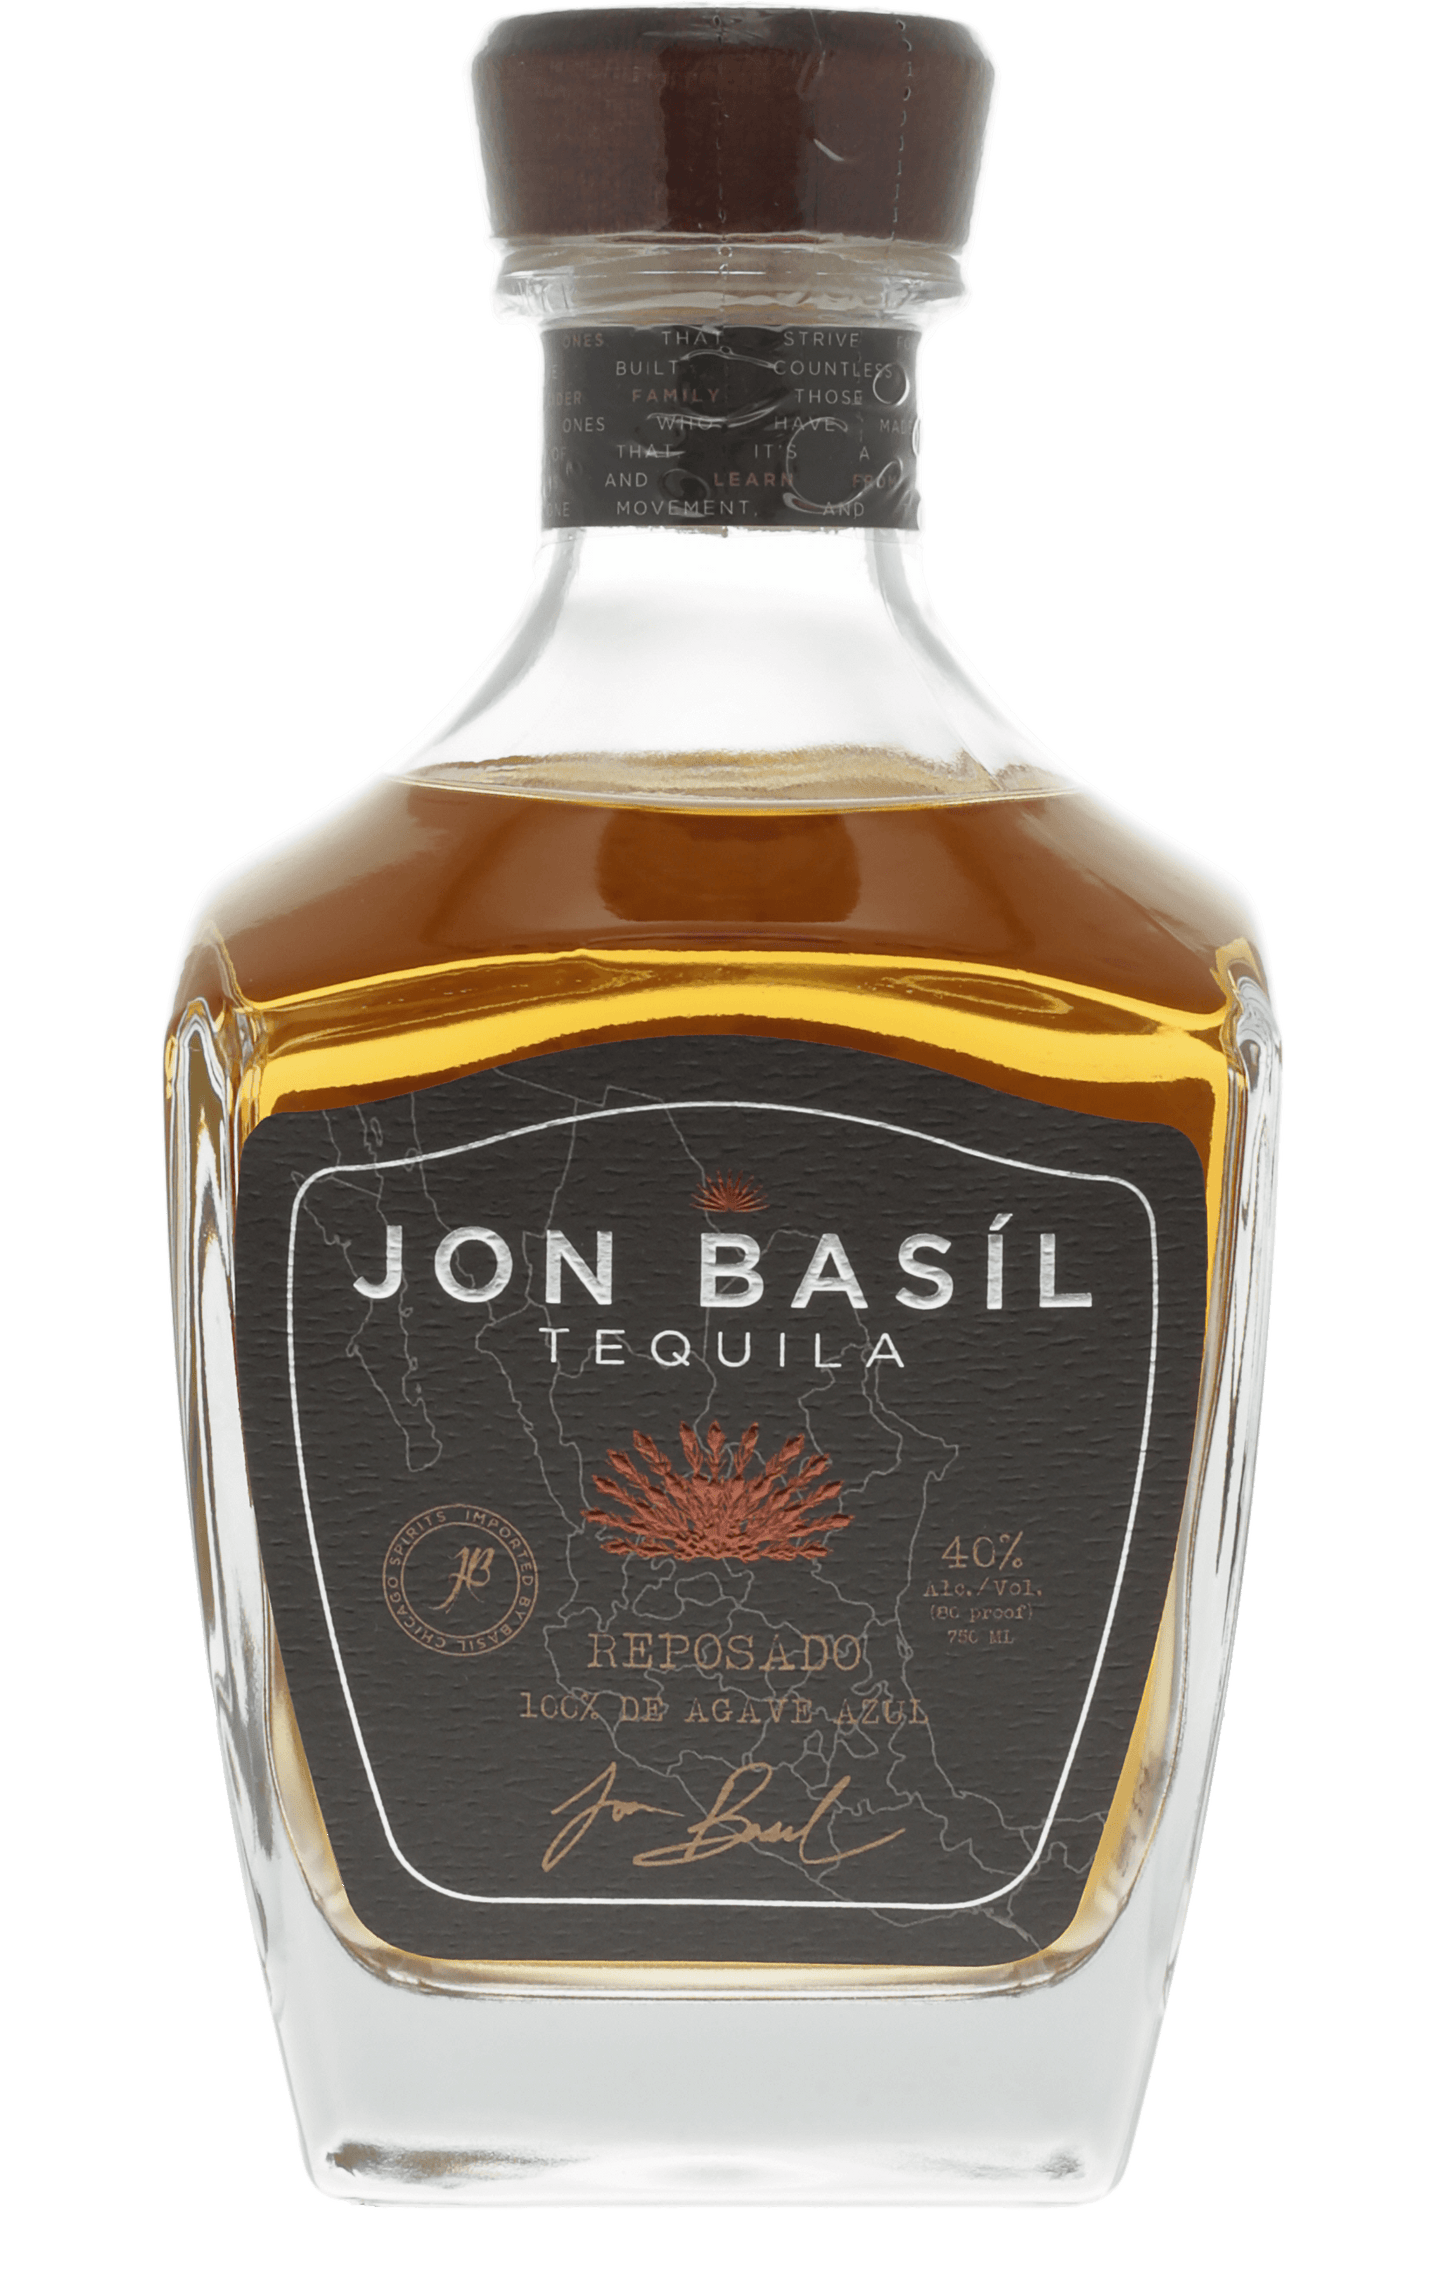 Jon Basil Tequila Reposado